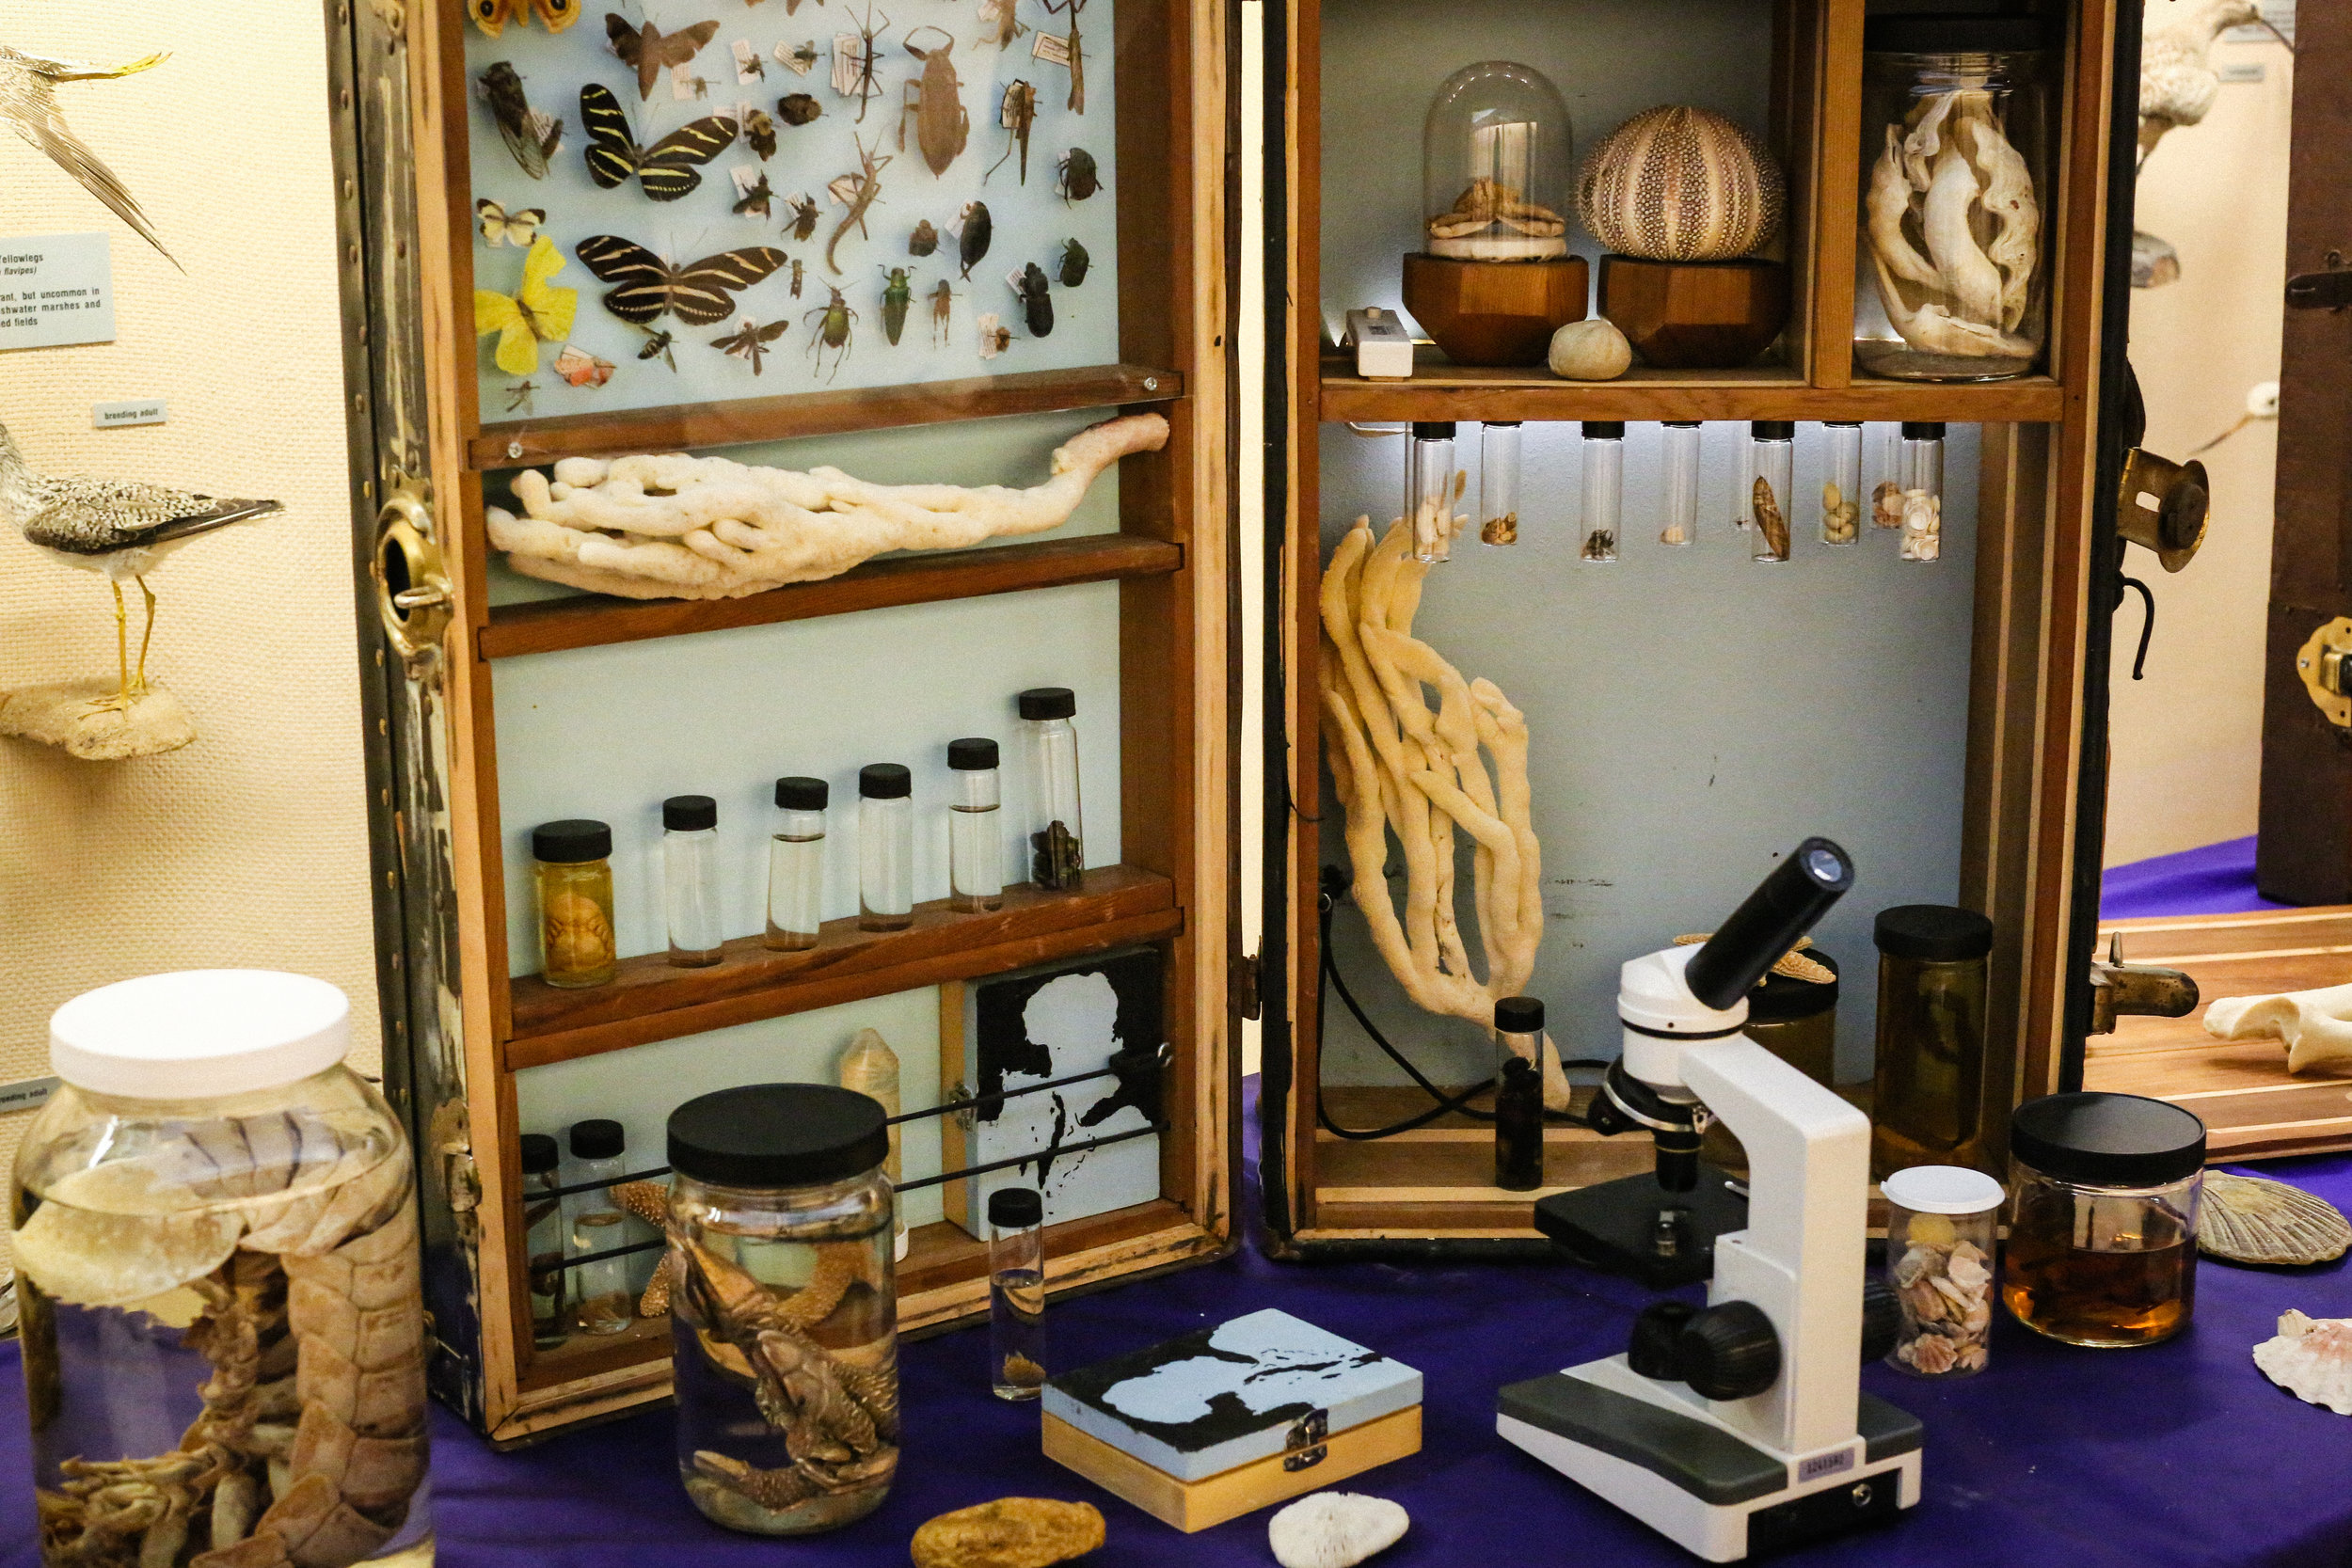 Crude Life's microscope exhibit is interactive by design